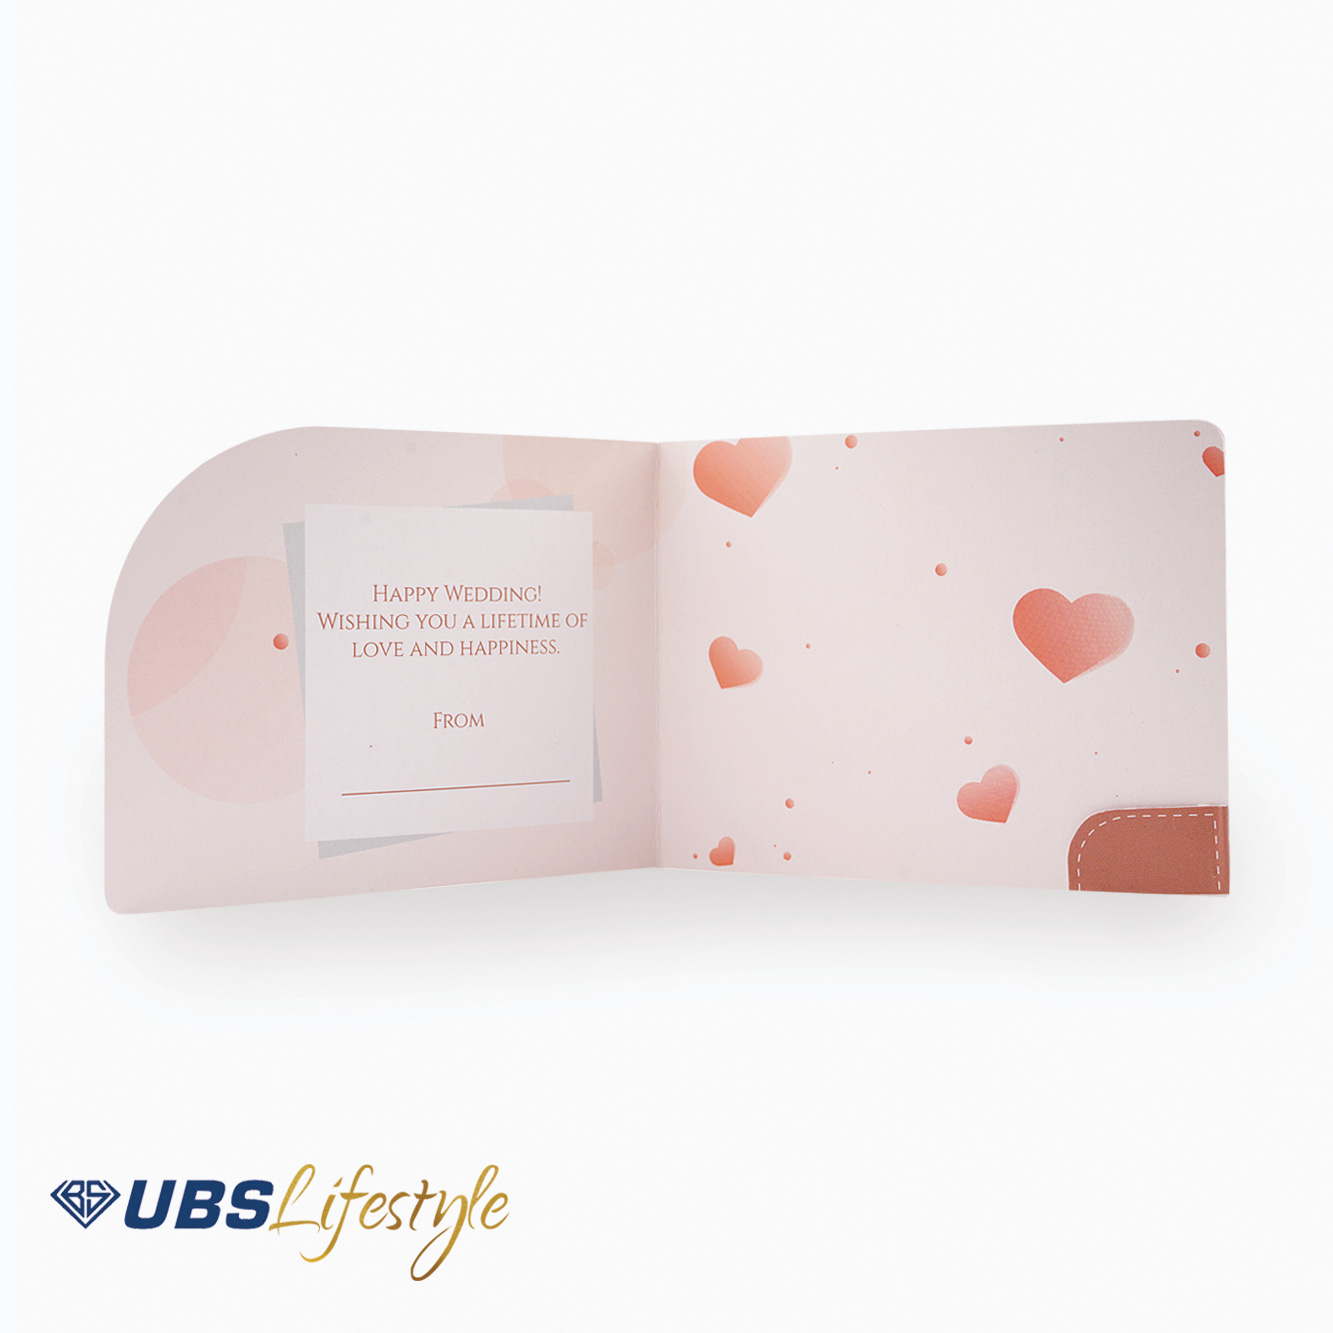 Kartu Ucapan UBS Lifestyle Edisi Wedding - Yakkk0485